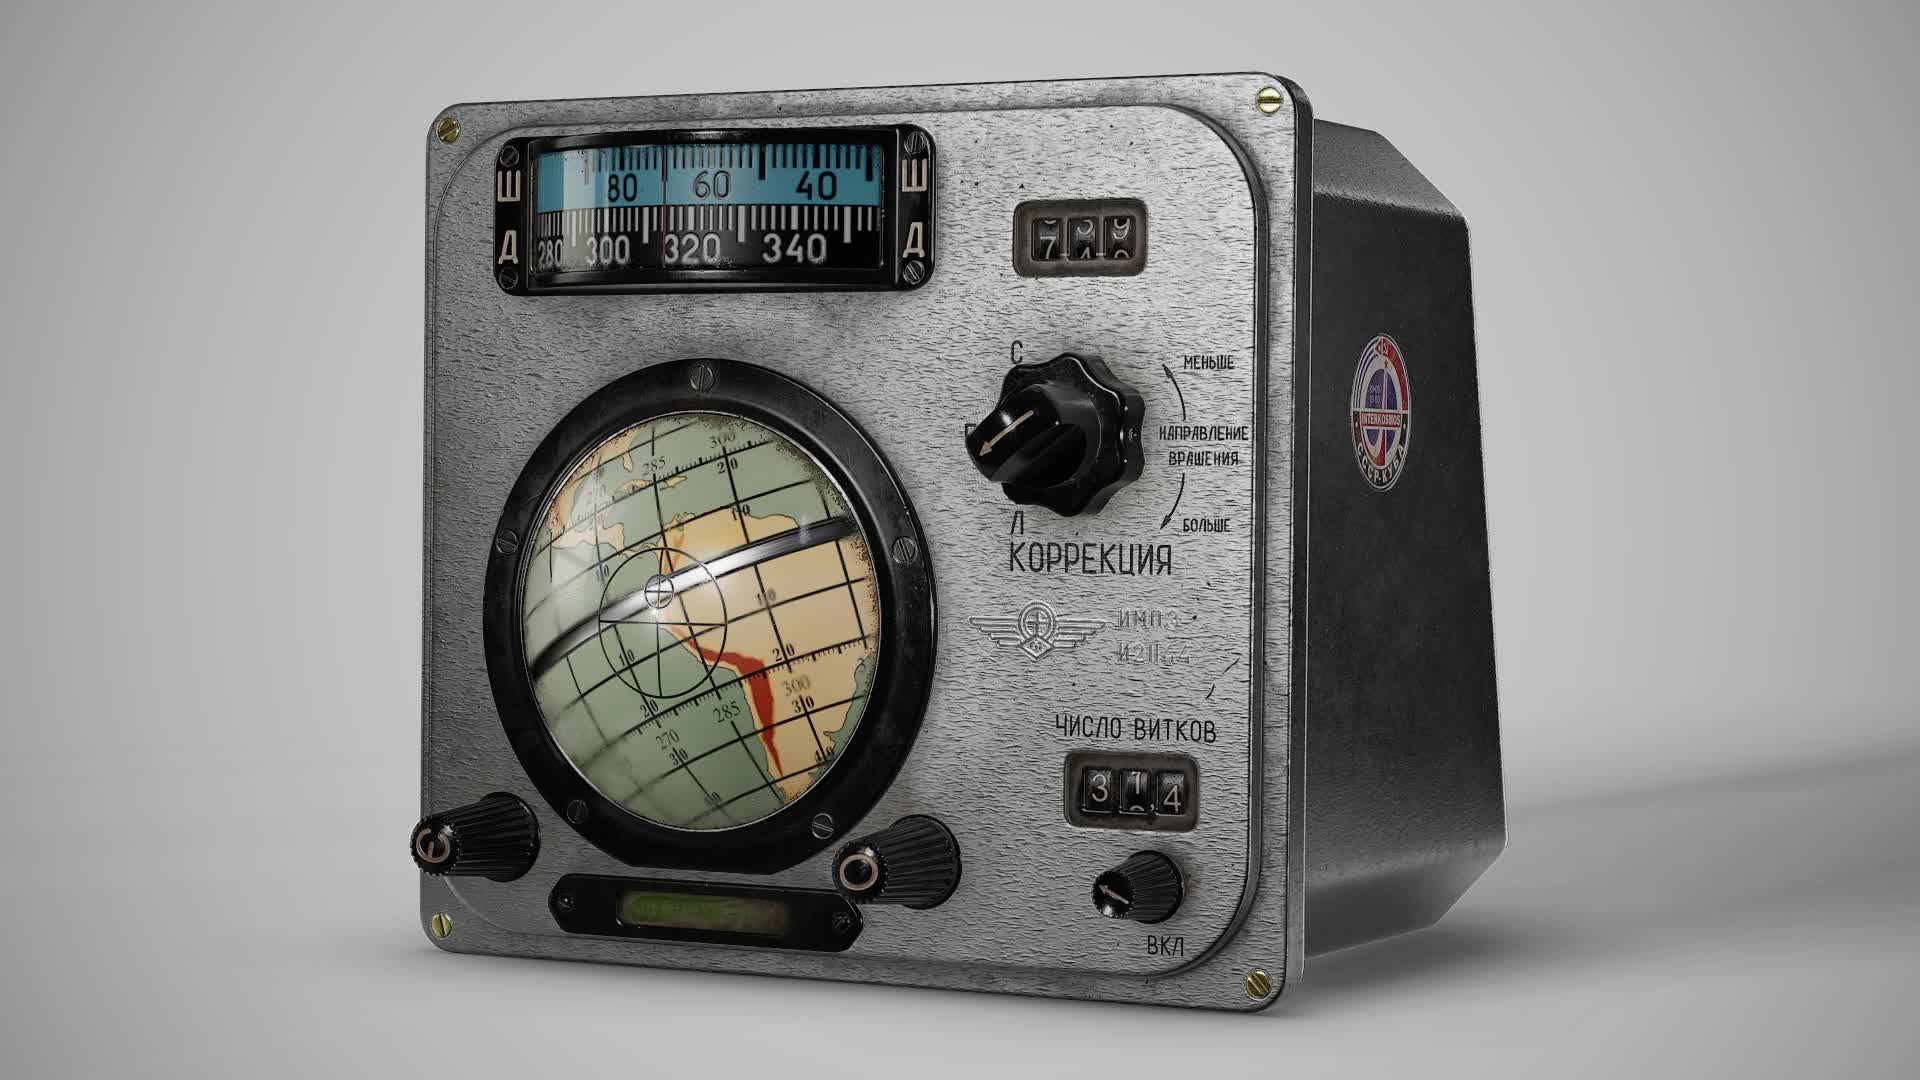 Voskhod Spacecraft Globus IMP navigation instrument - Wikipedia